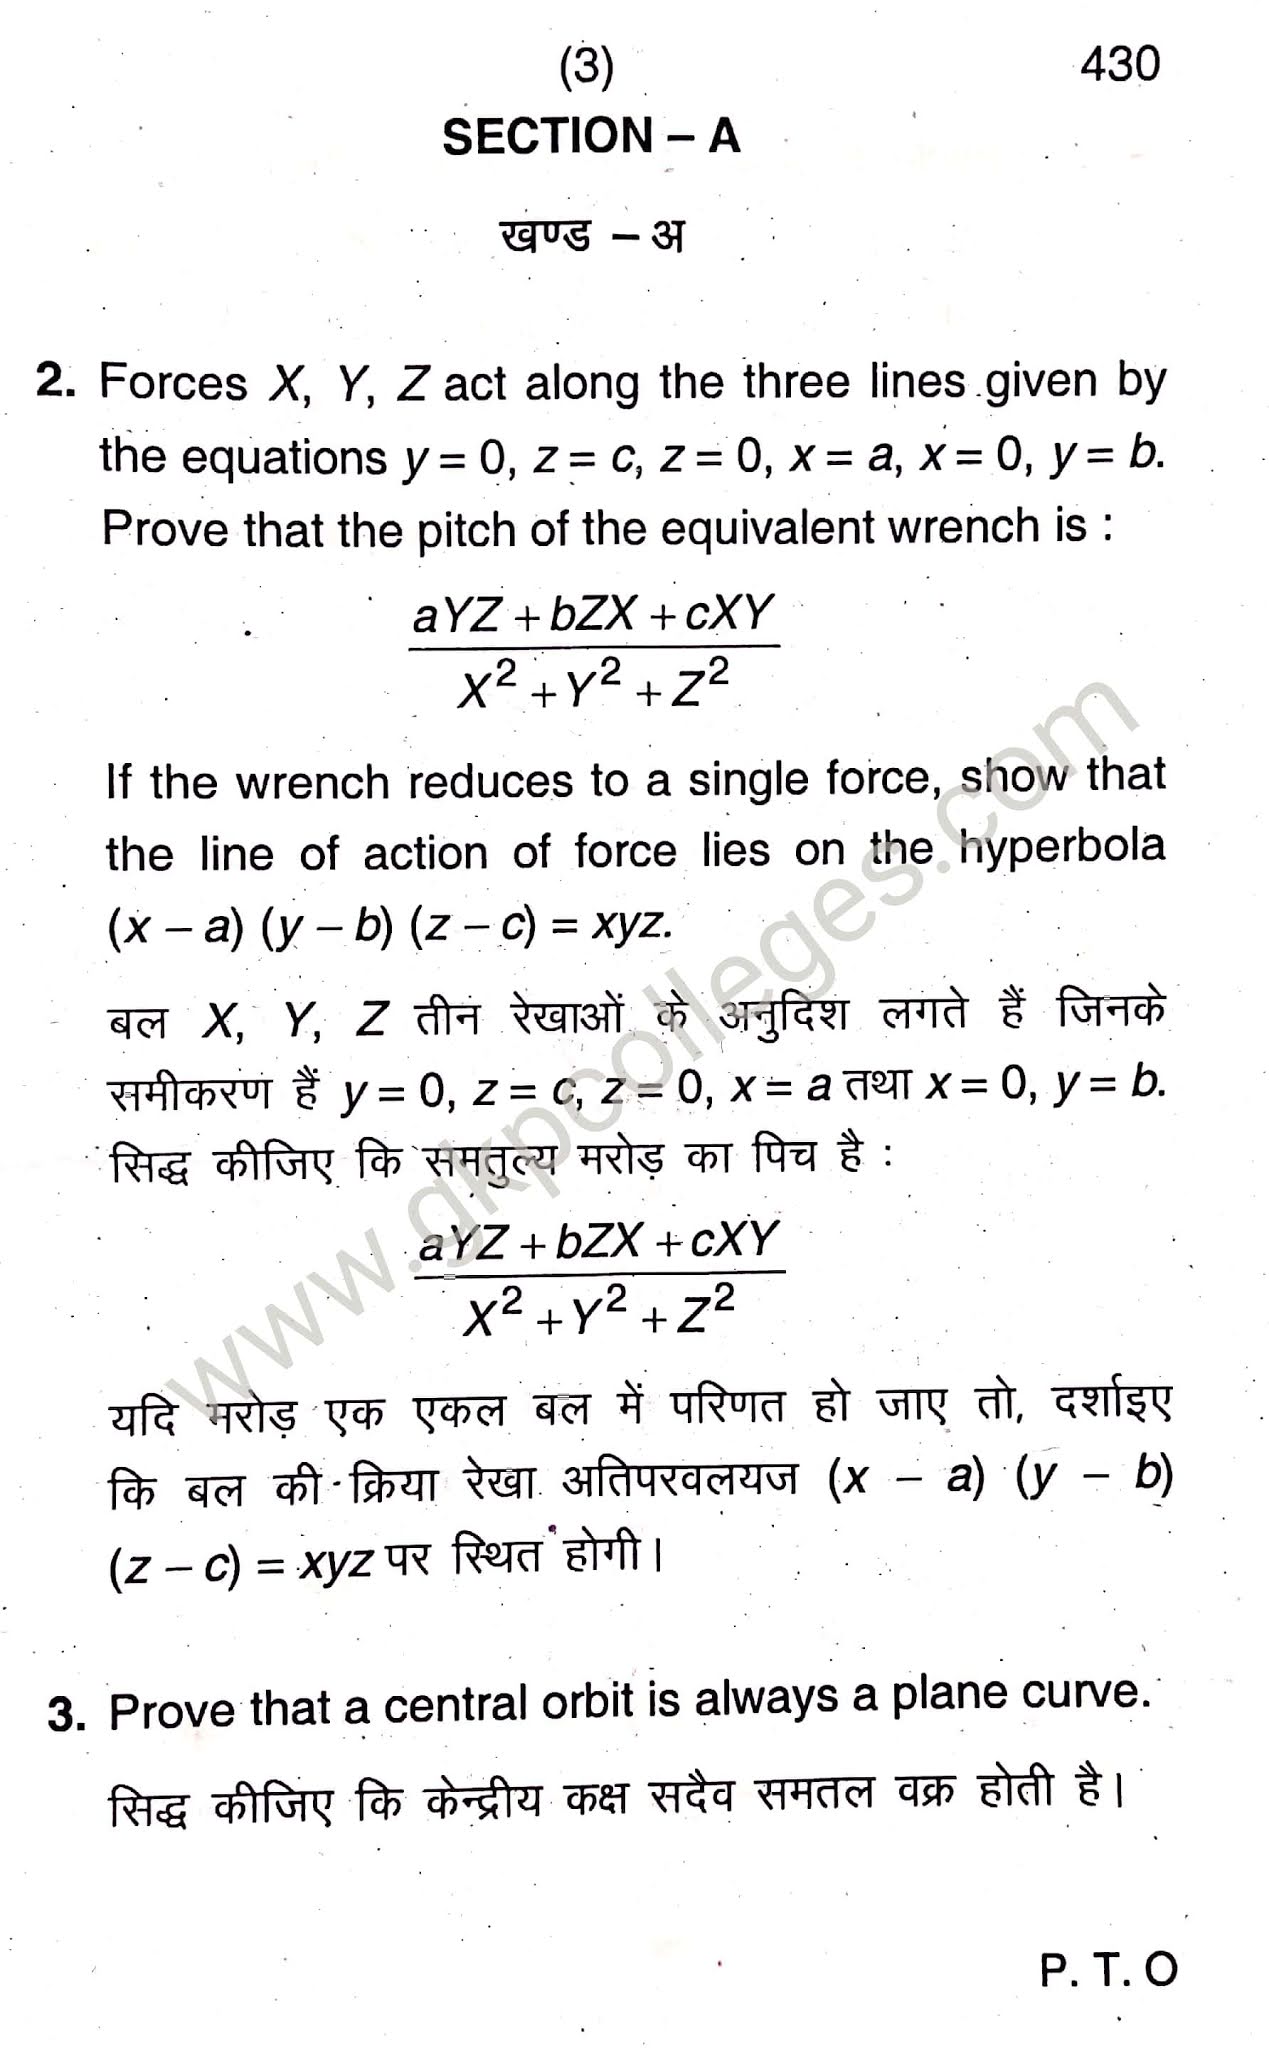 Mechanics, Mathematics Paper- 4th for B.Sc. 3rd year students, DDU Gorakhpur University Examination 2020